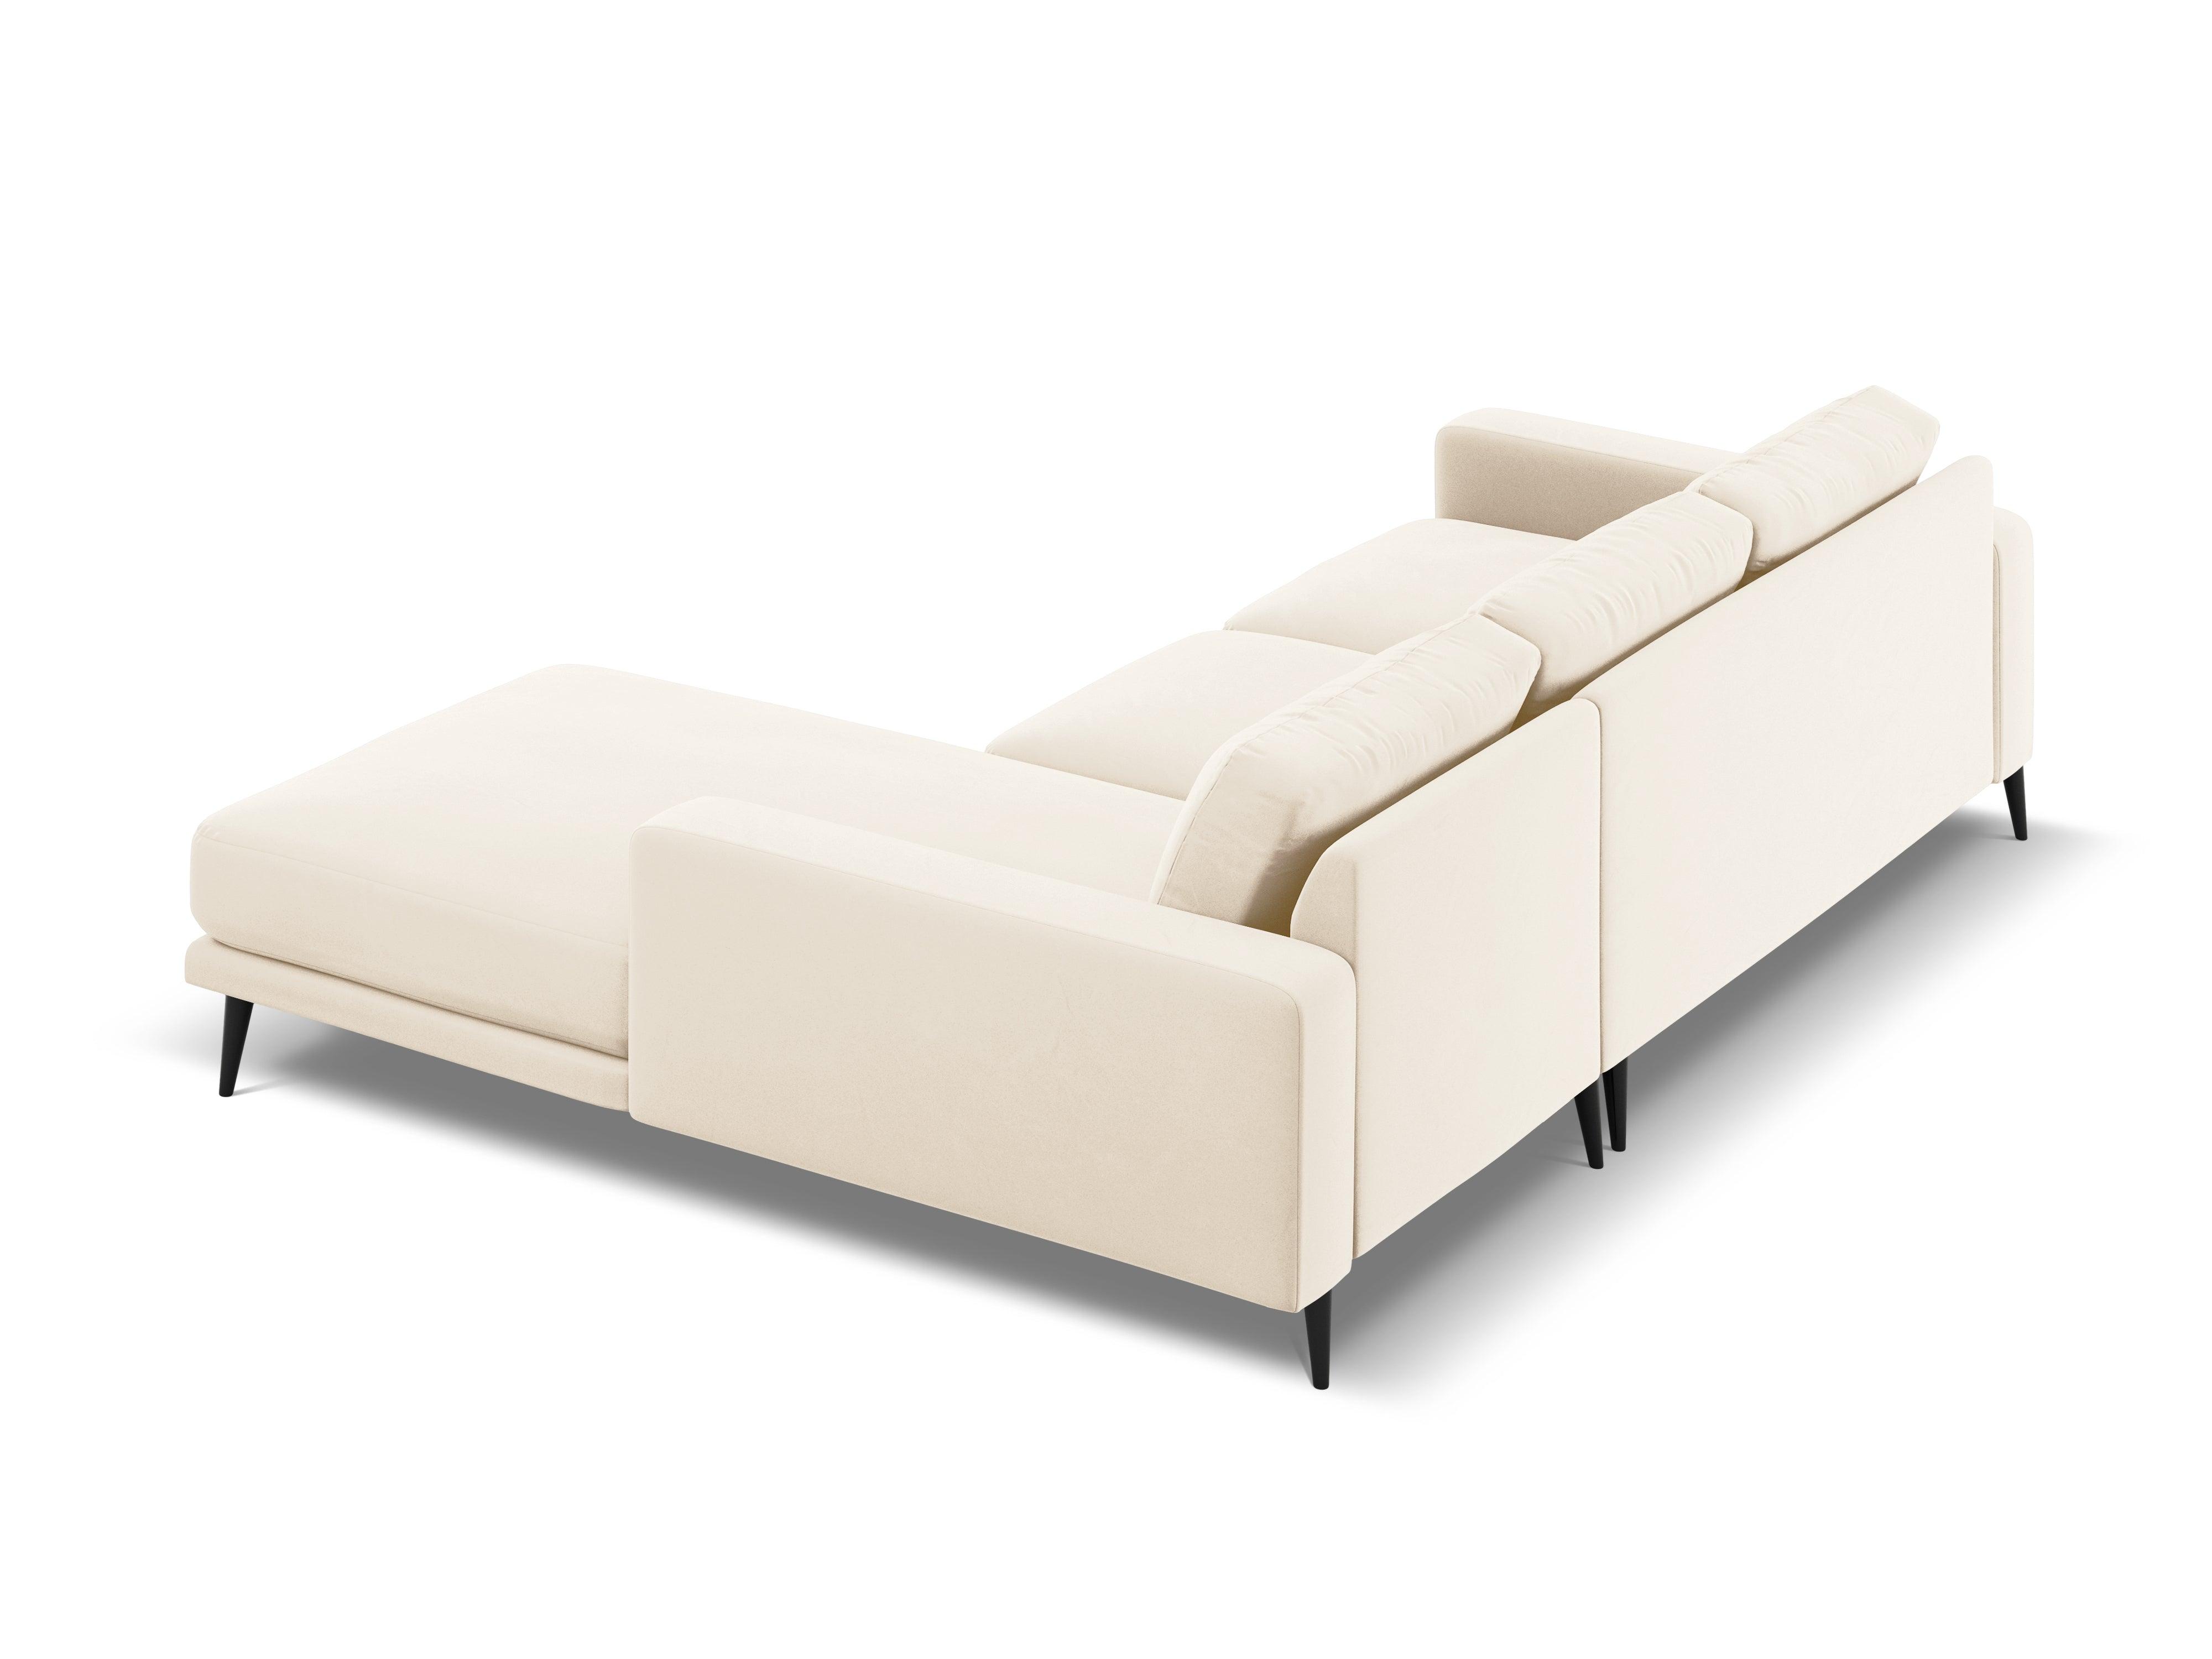 Velvet Right Corner Sofa, "Kylie", 4 Seats, 232x160x80
Made in Europe, Micadoni, Eye on Design